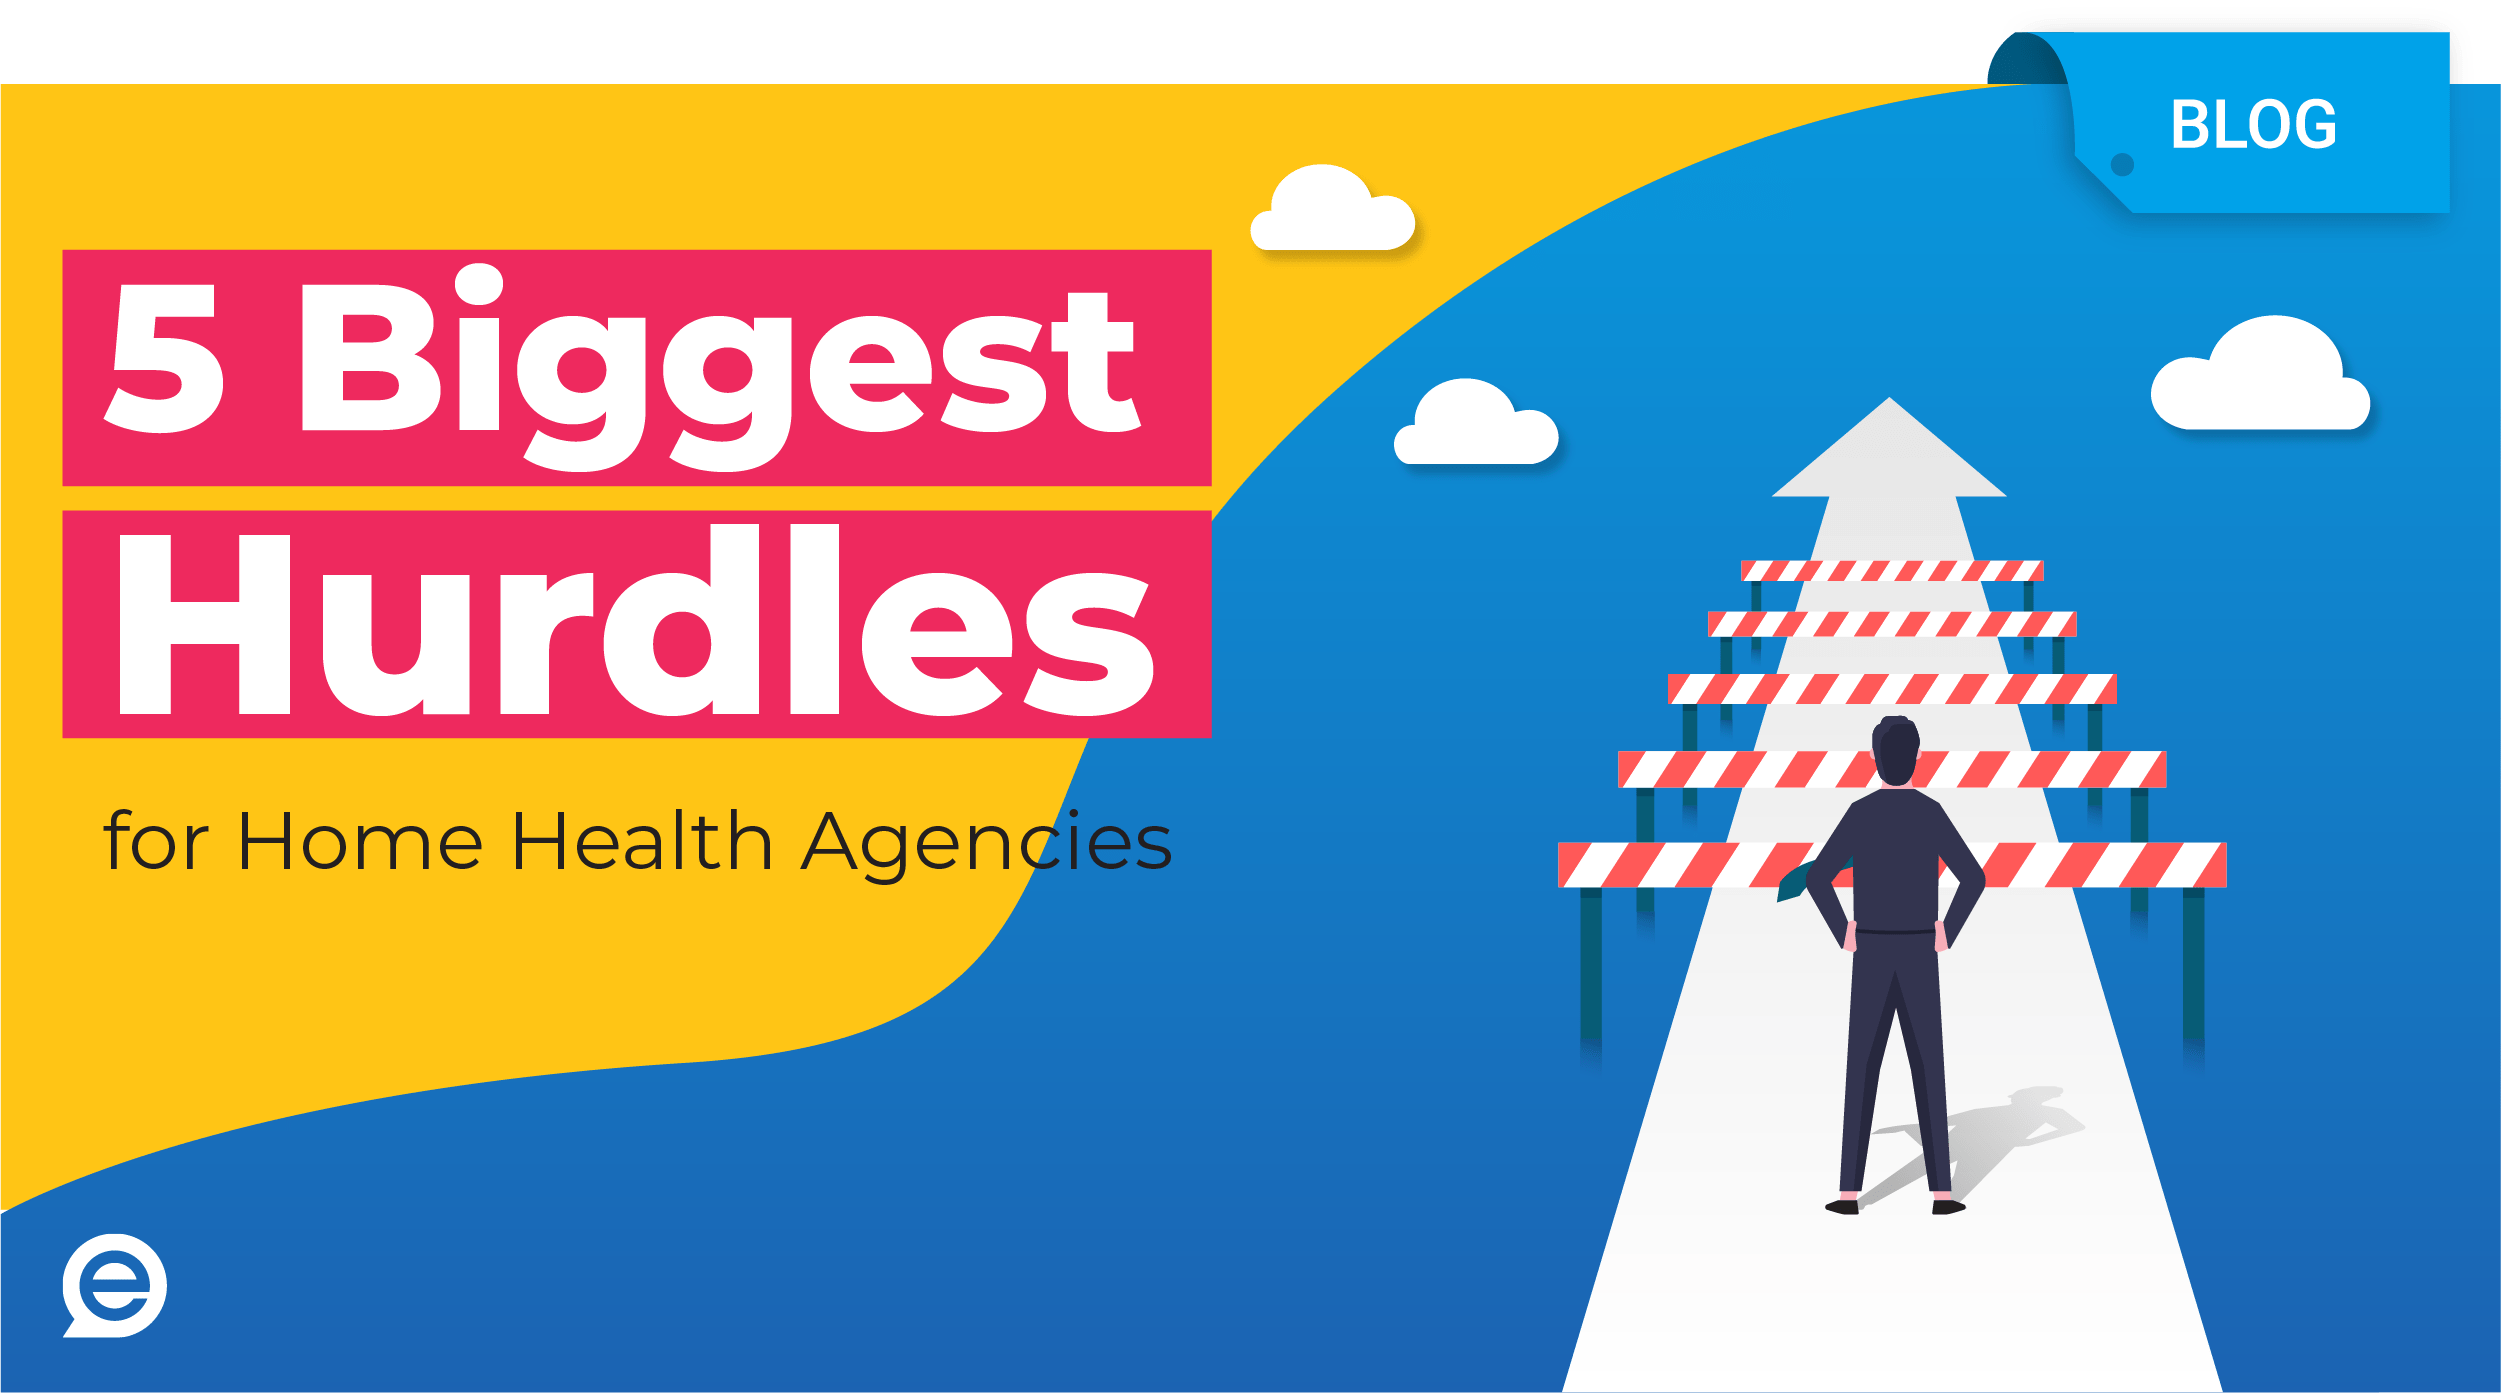 5 Biggest Hurdles for Home Health Agencies